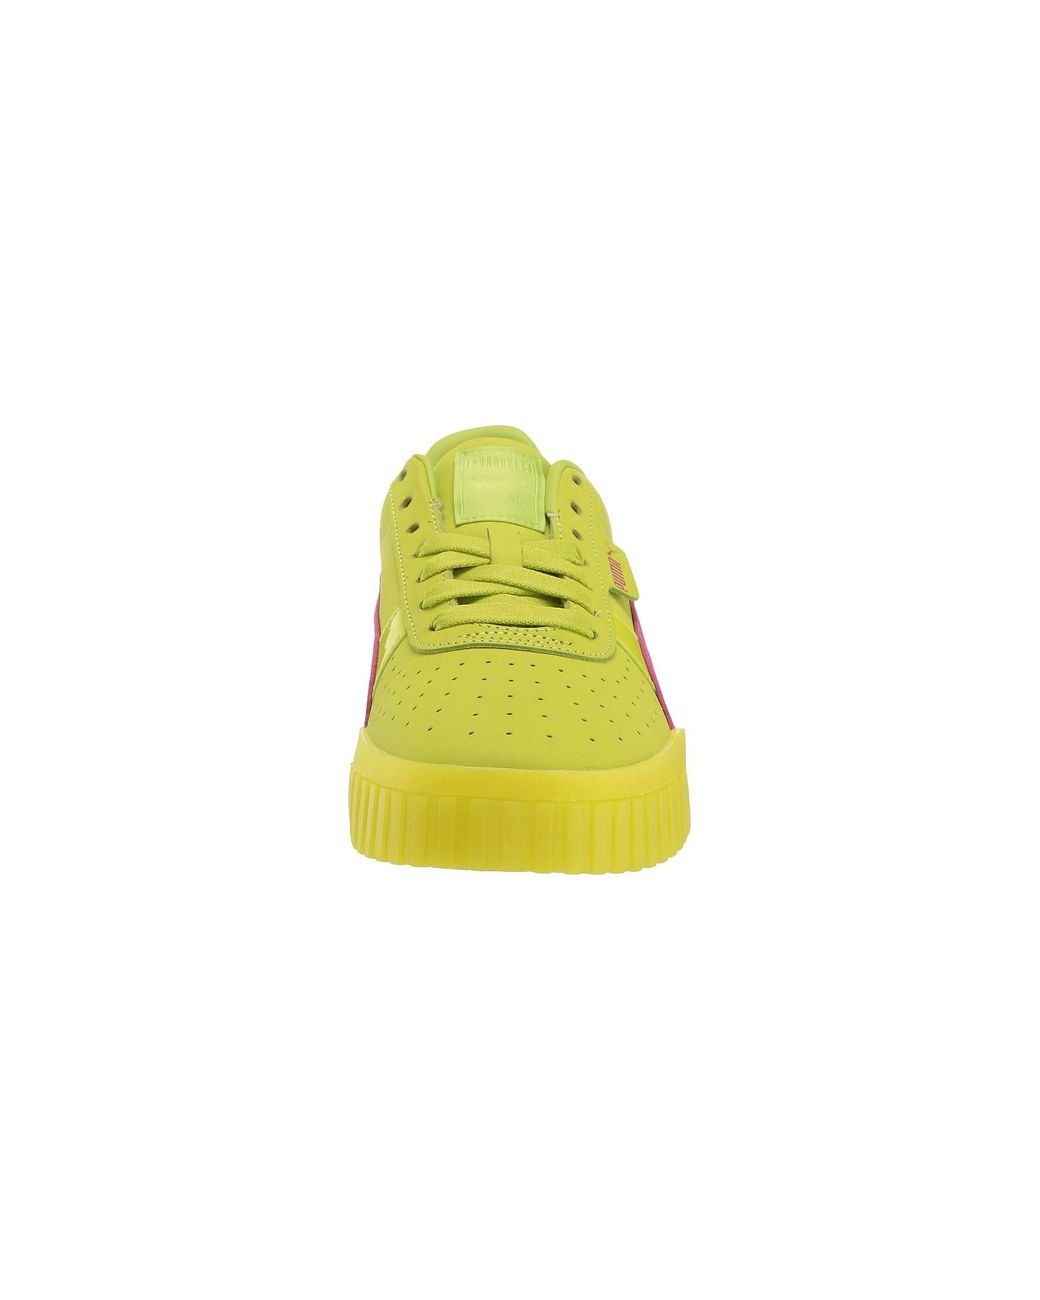 PUMA Cali 90s (limepunch/fuchsia Purple) Women's Shoes in Yellow | Lyst